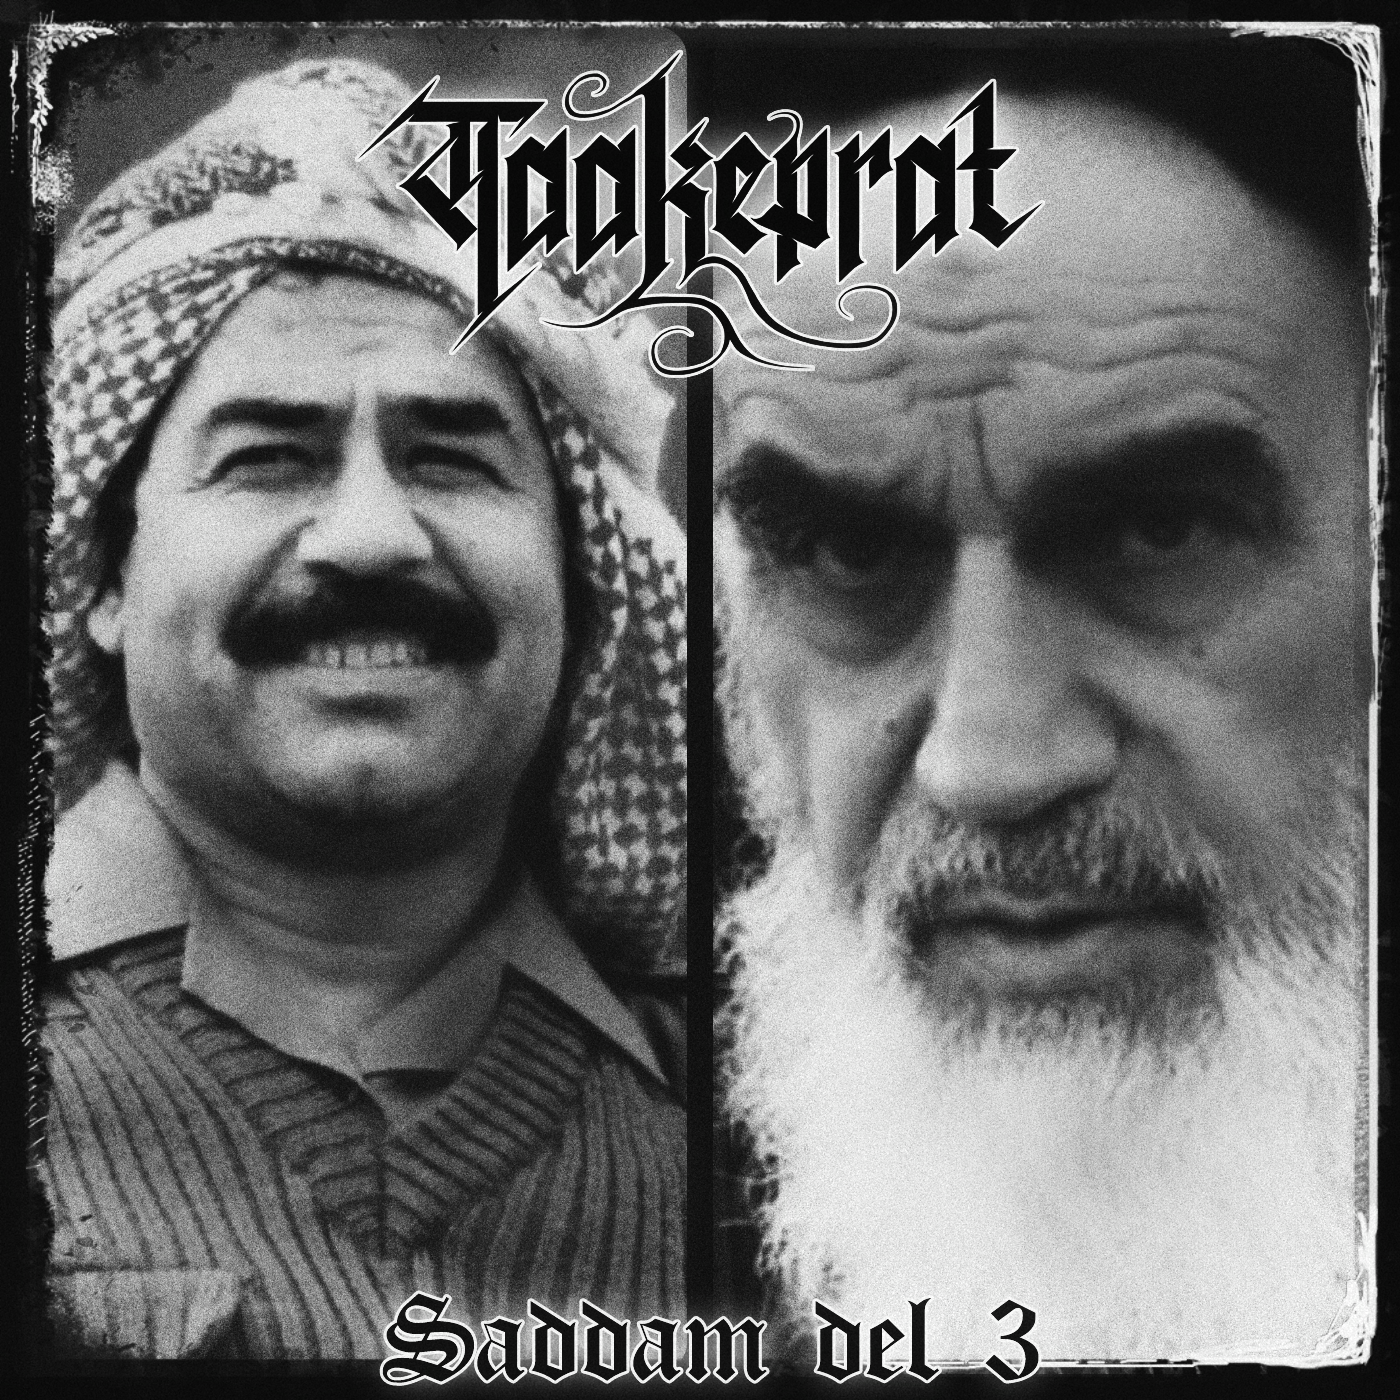 Episode 177 - Saddam del 3